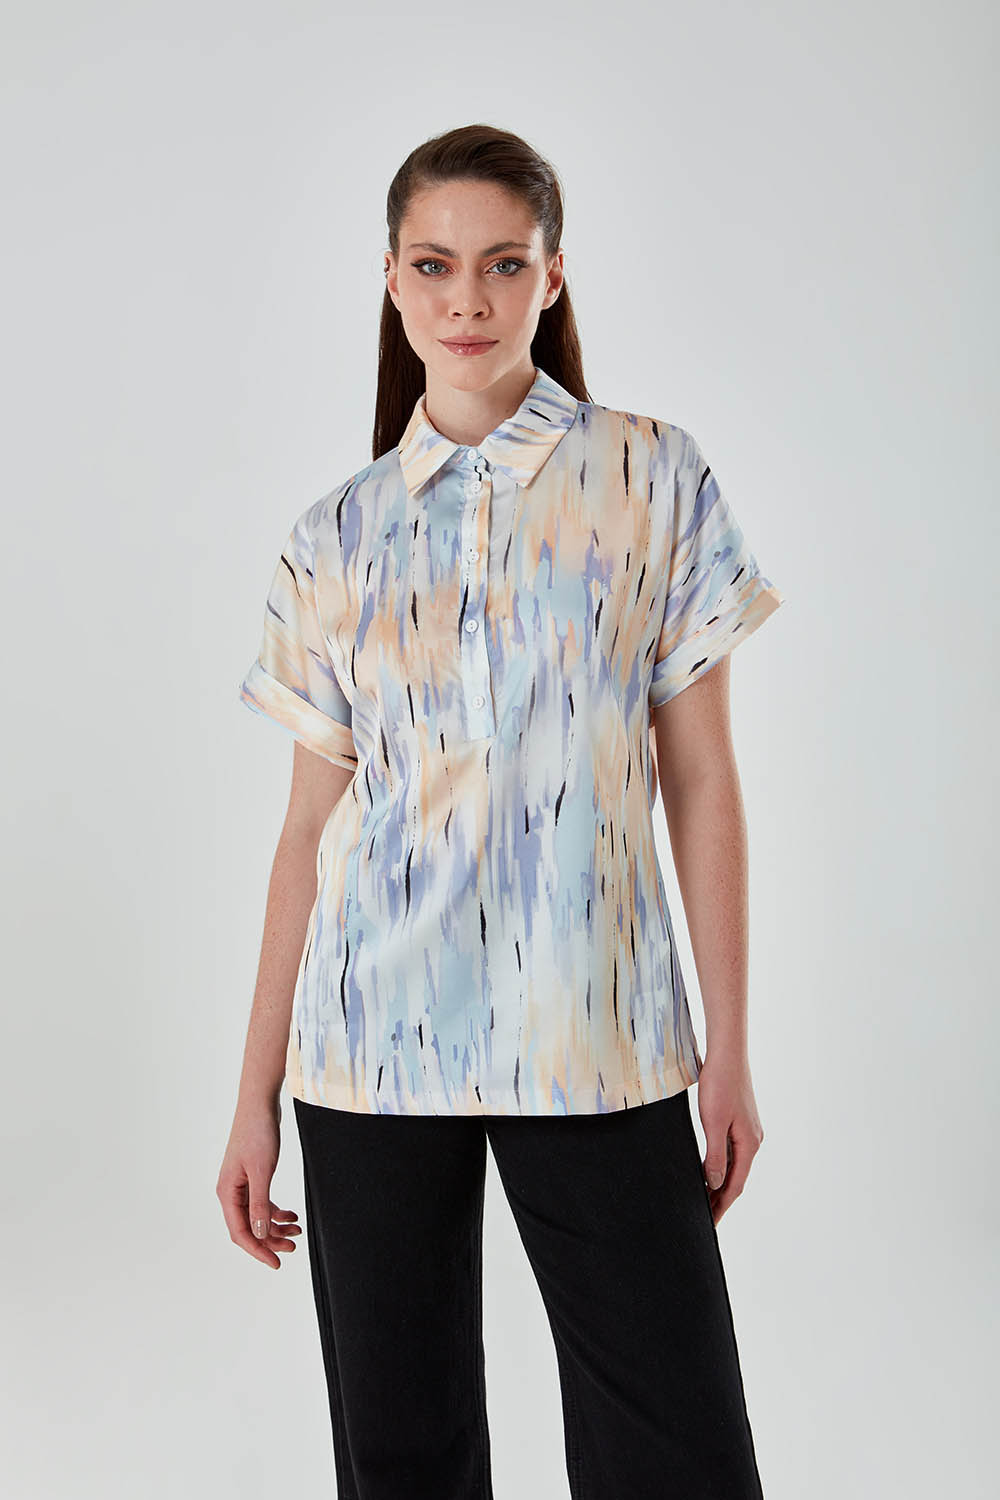 Shirt Collar Short Sleeve Patterned Blouse